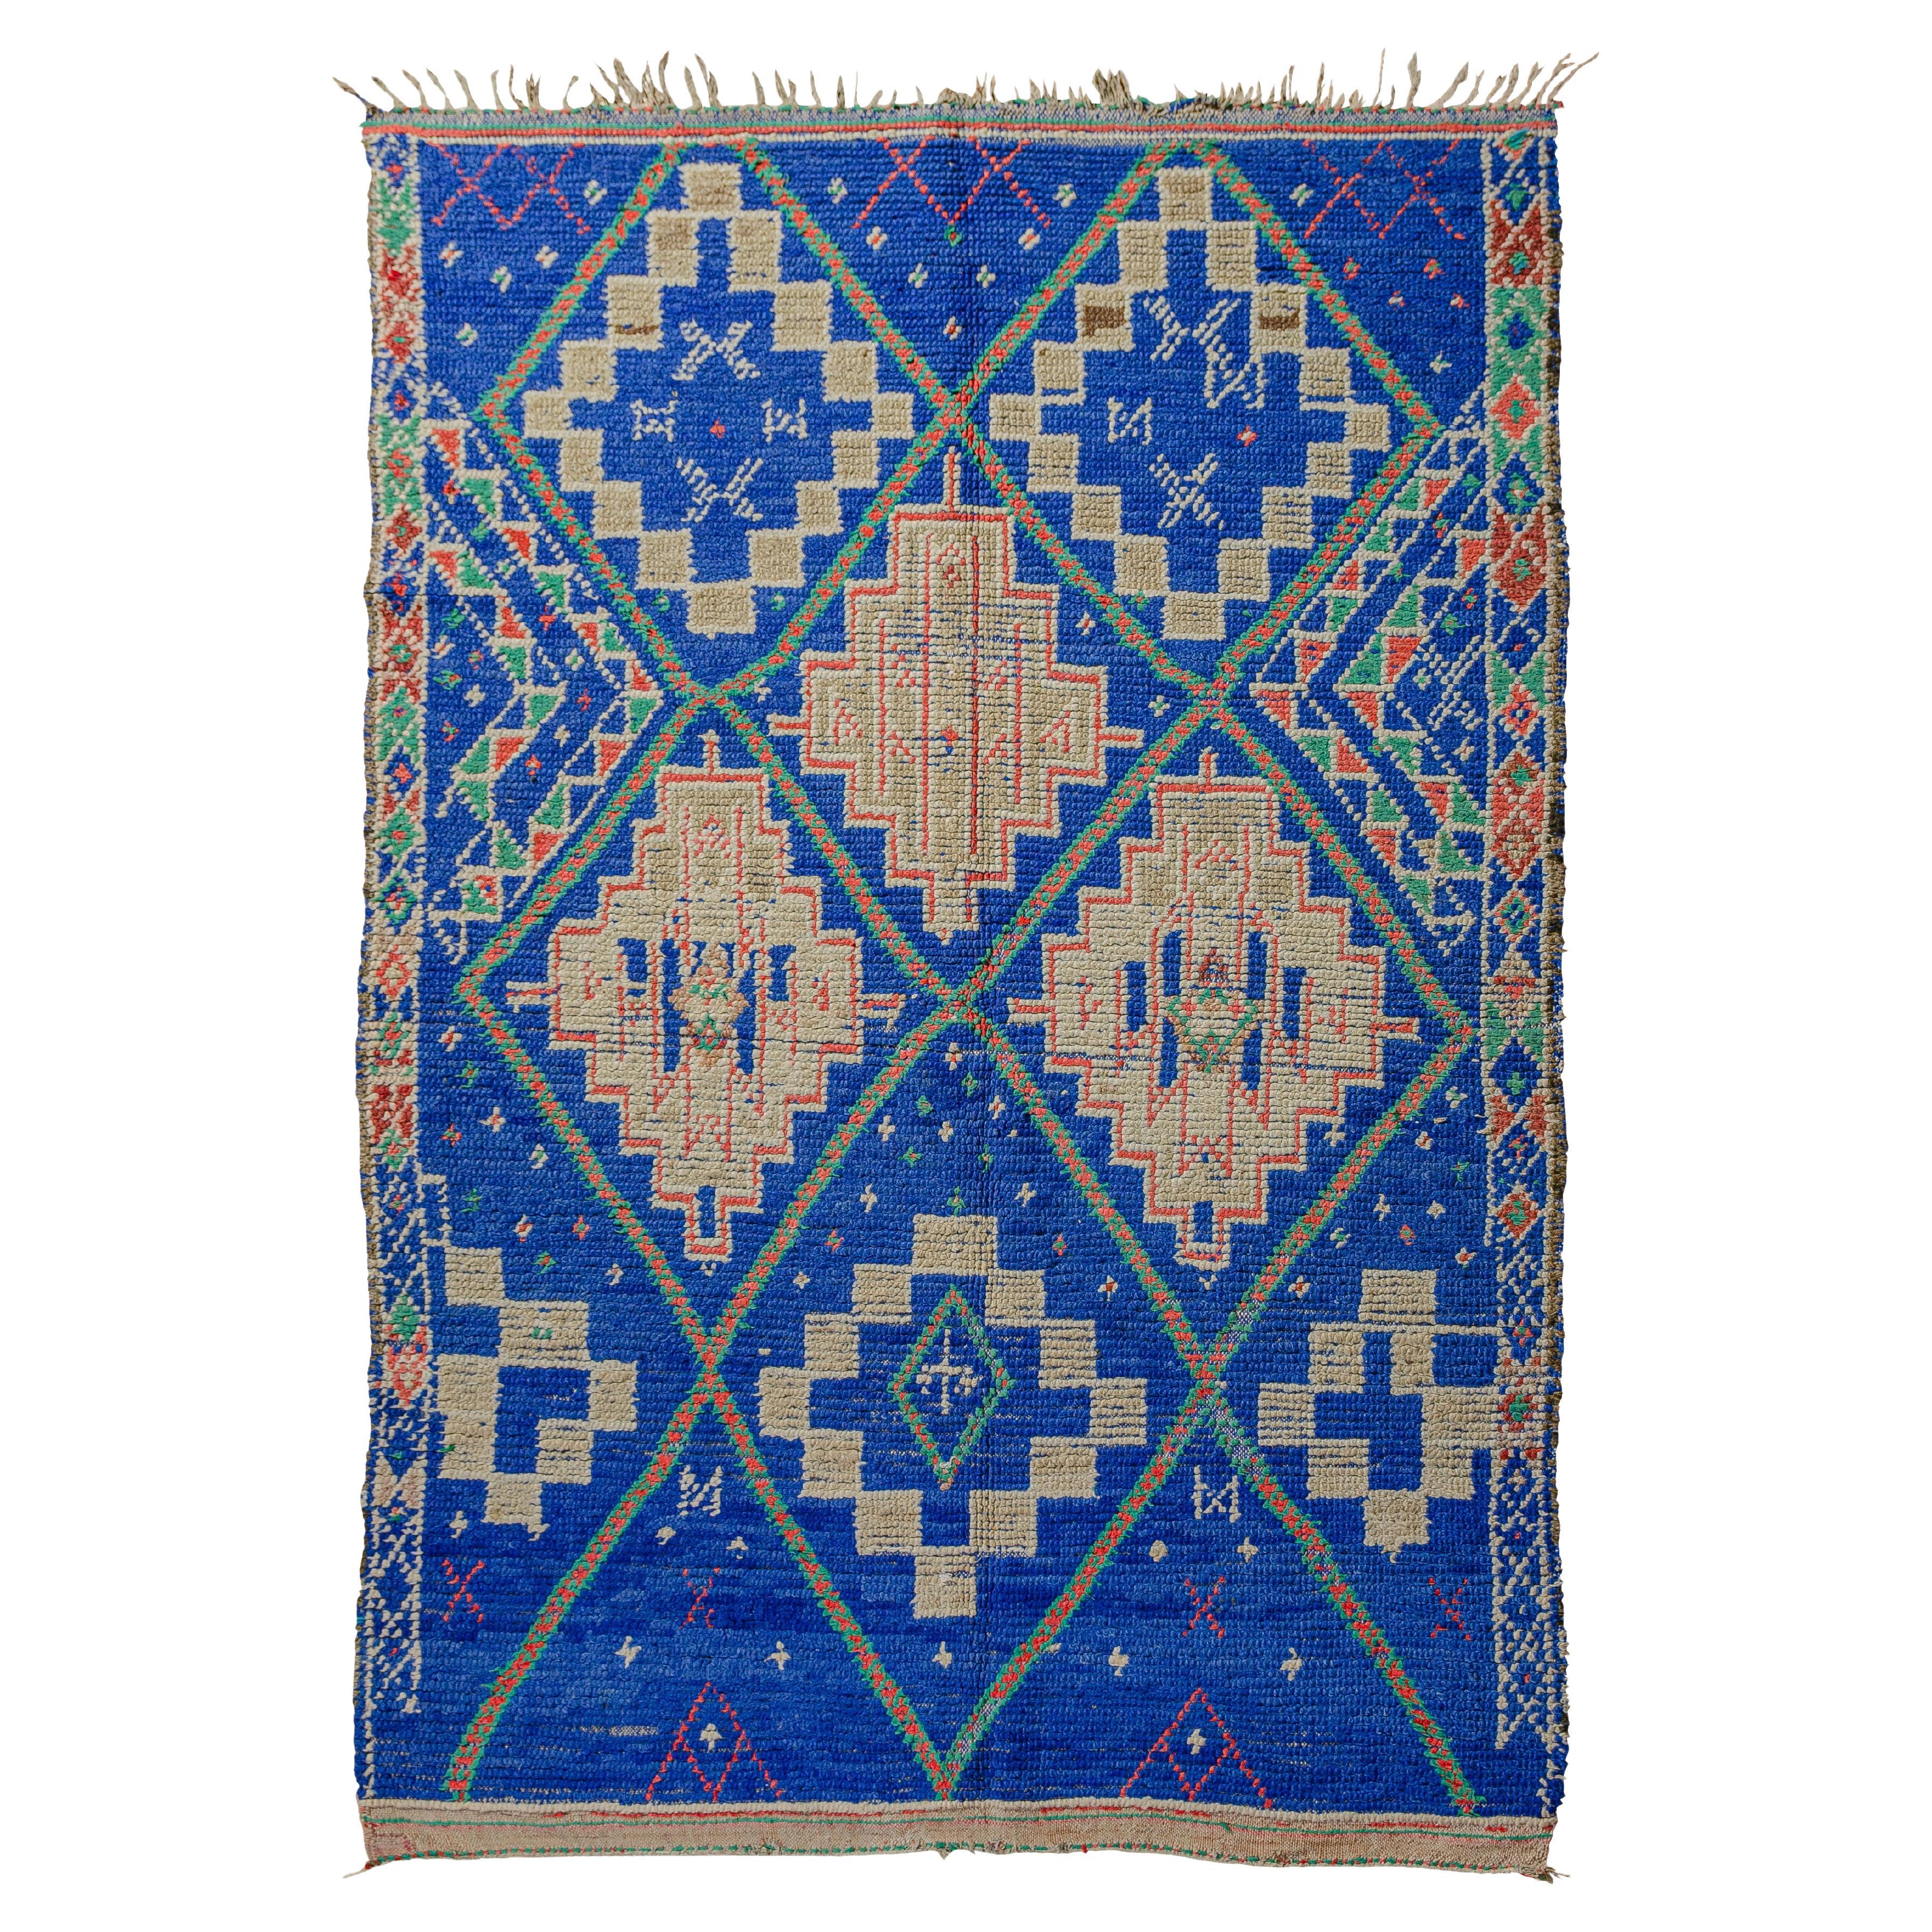 An impactful vintage cobalt Beni M’Guild rug curated by Breuckelen Berber For Sale